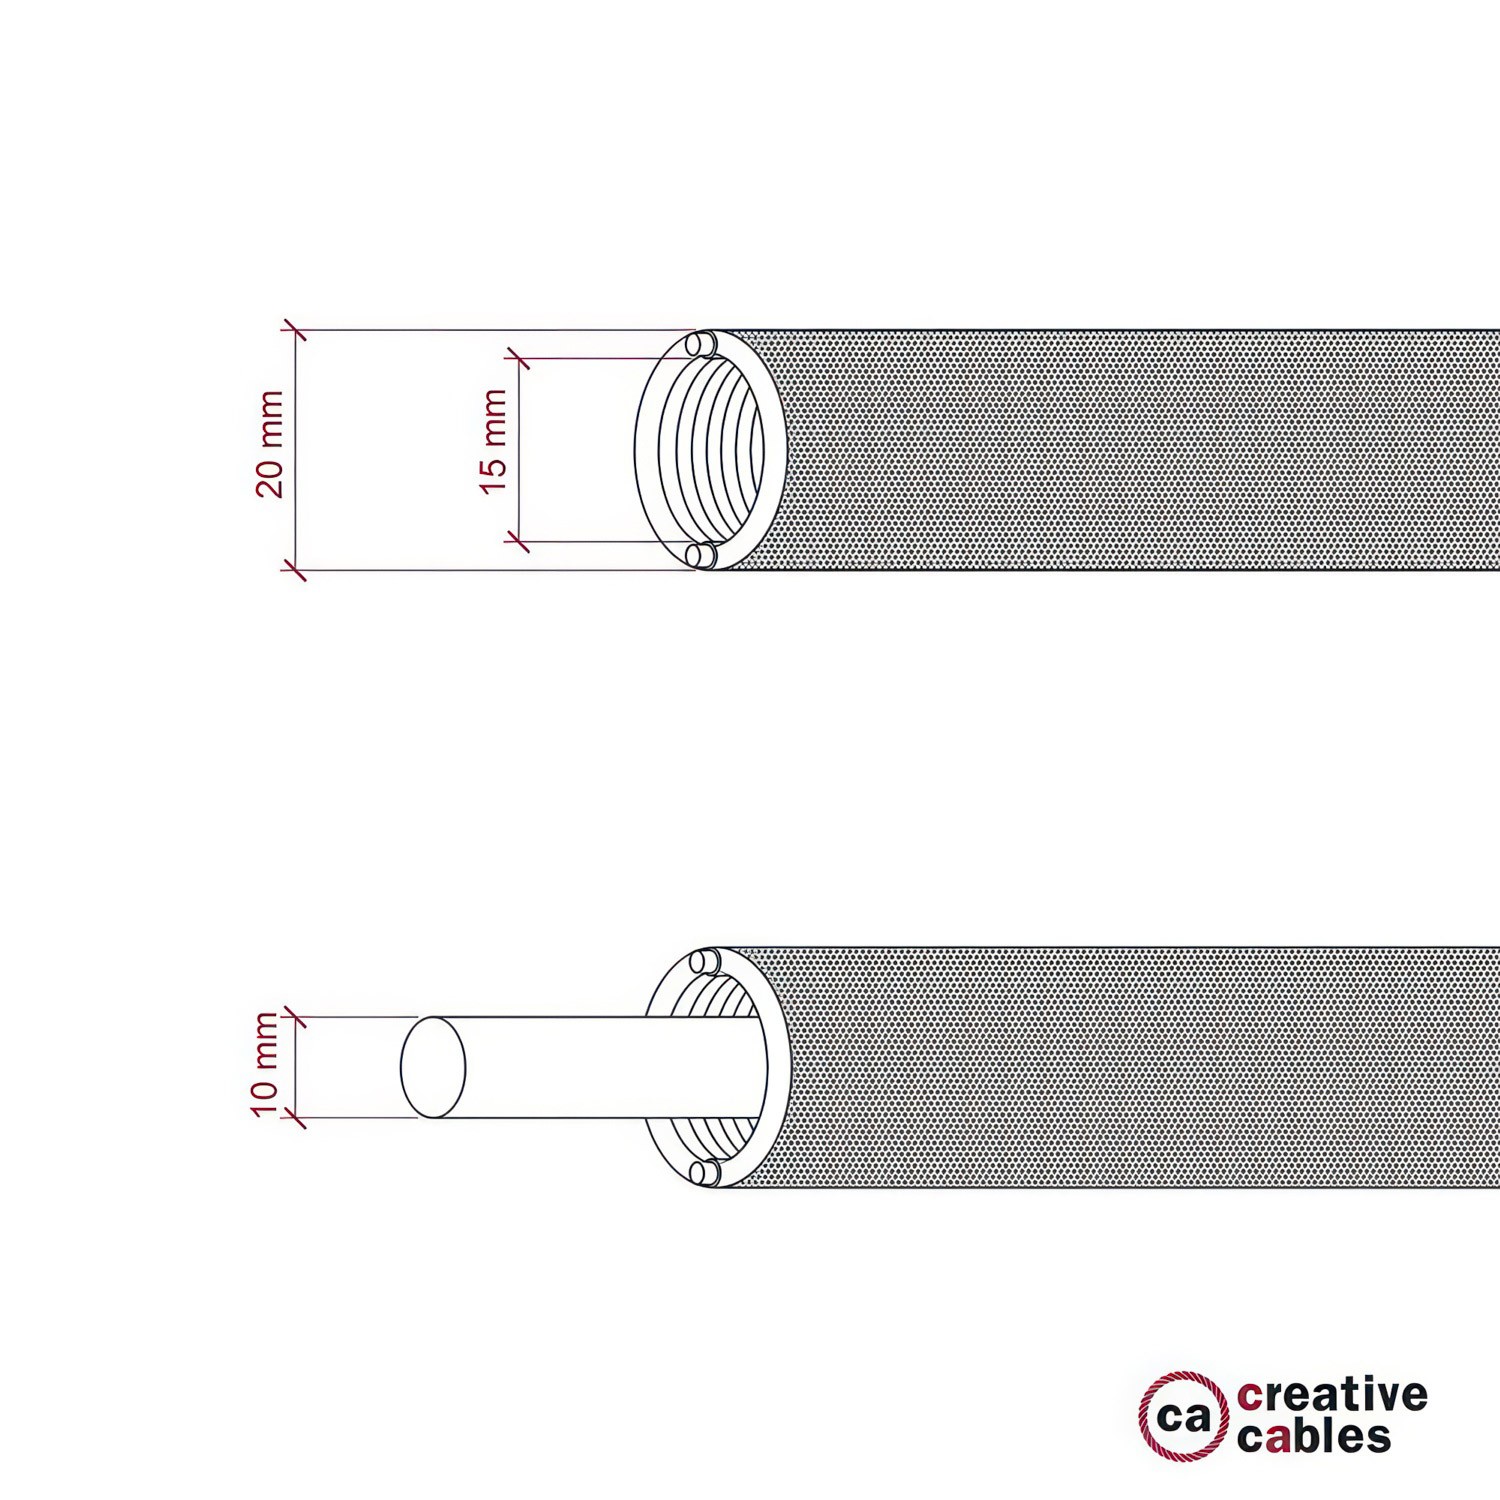 Design flexibele elektrabuis met stof omweven - Creative-Tube fluo oranje viscose RF15 20 mm.